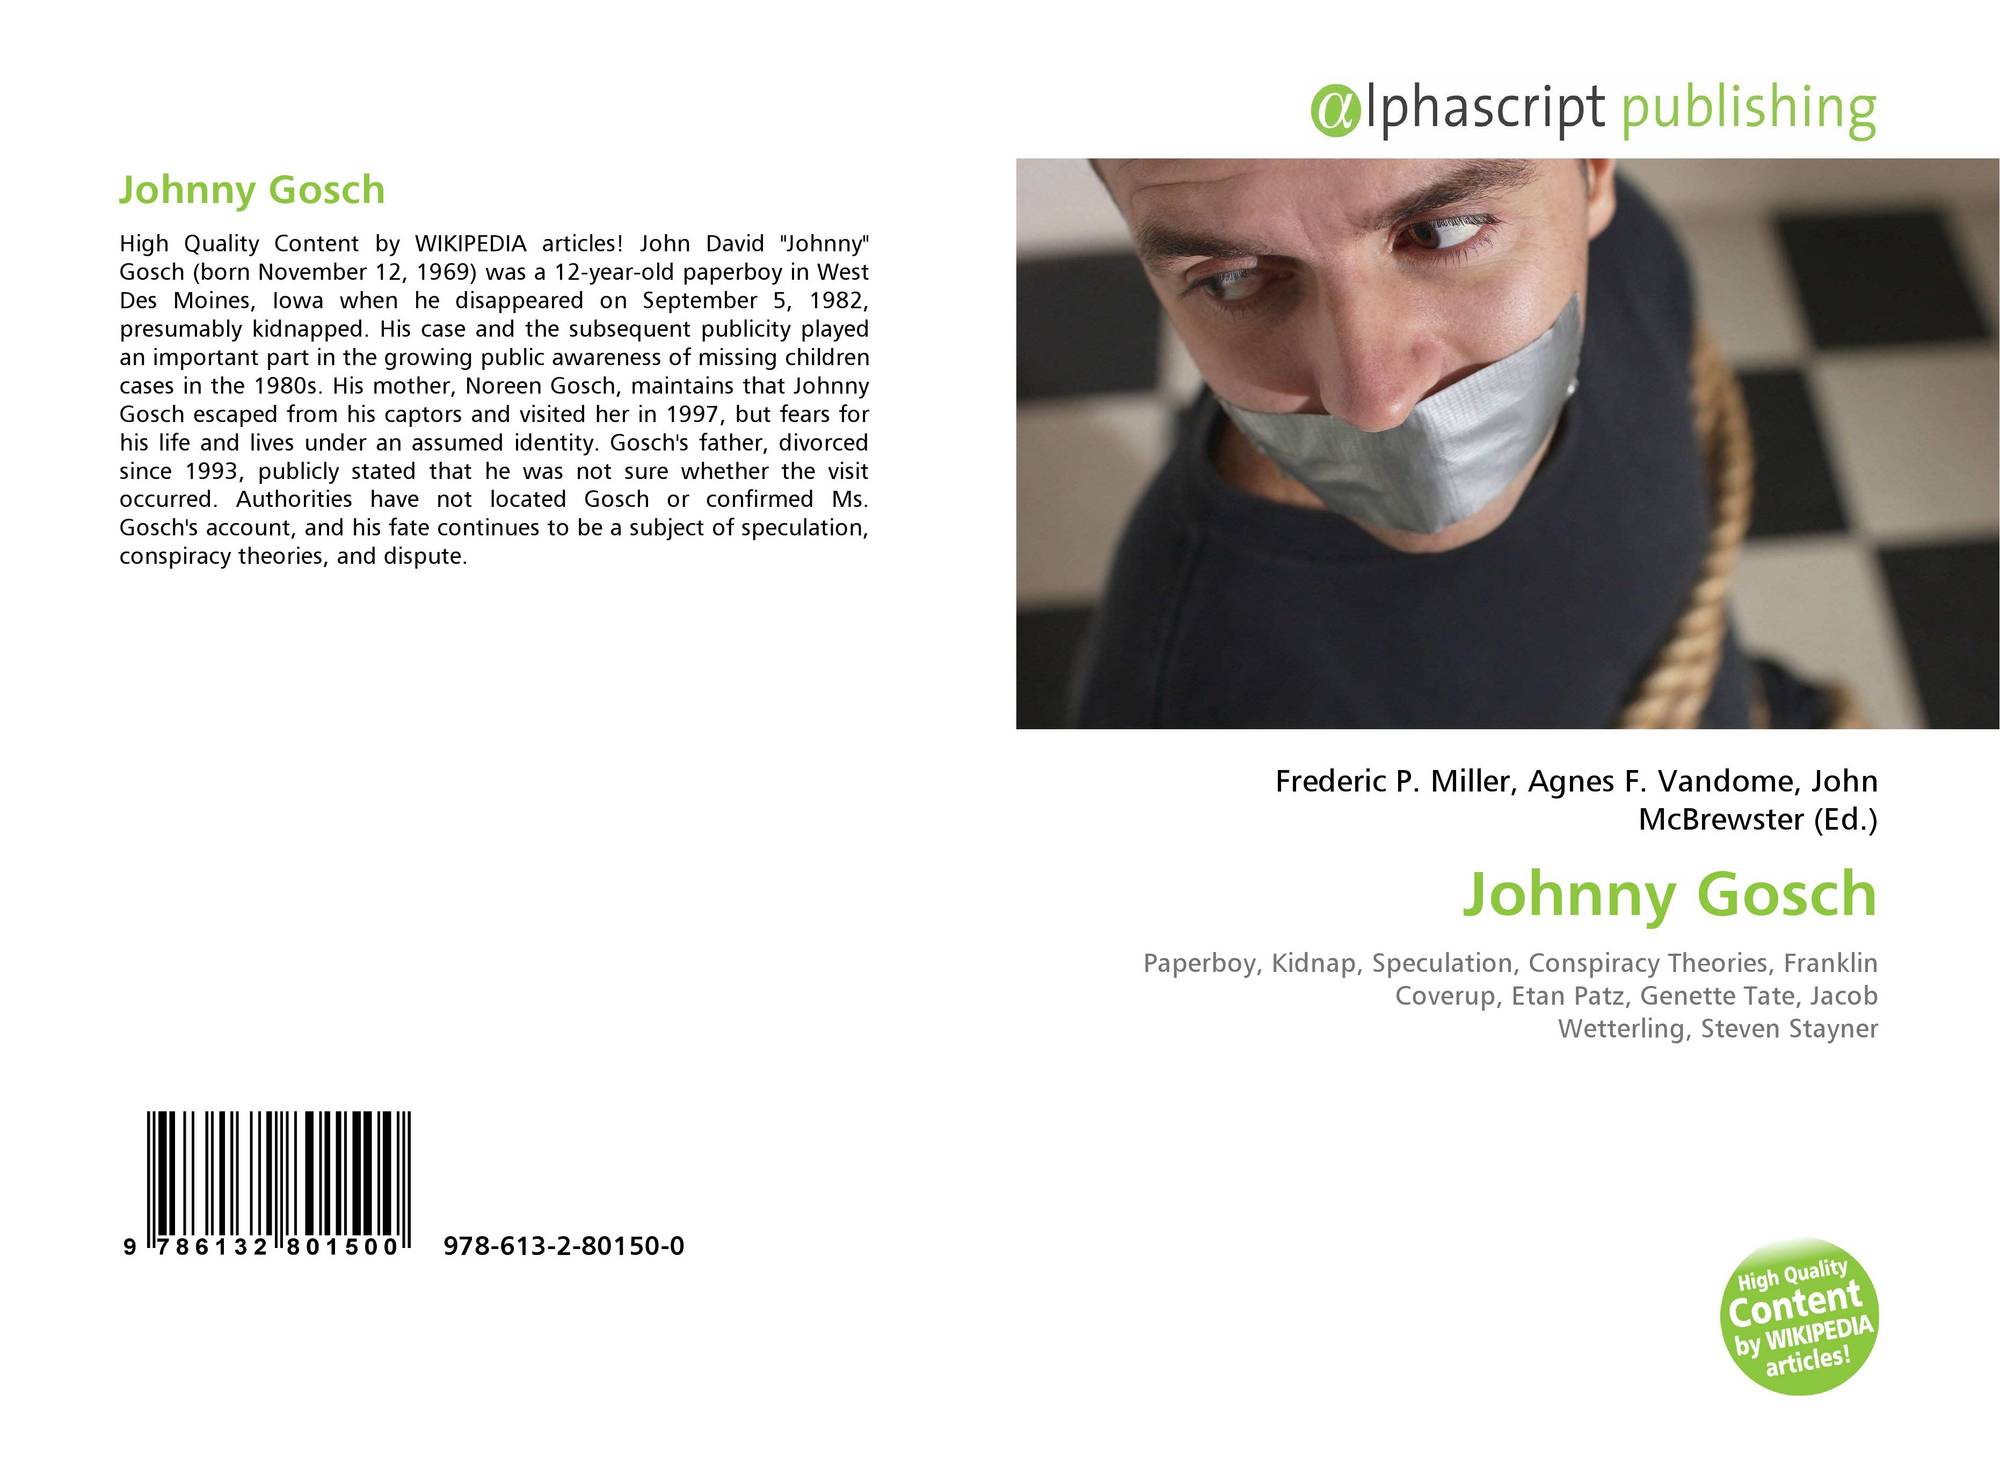 Johnny Gosch 978 613 2 0